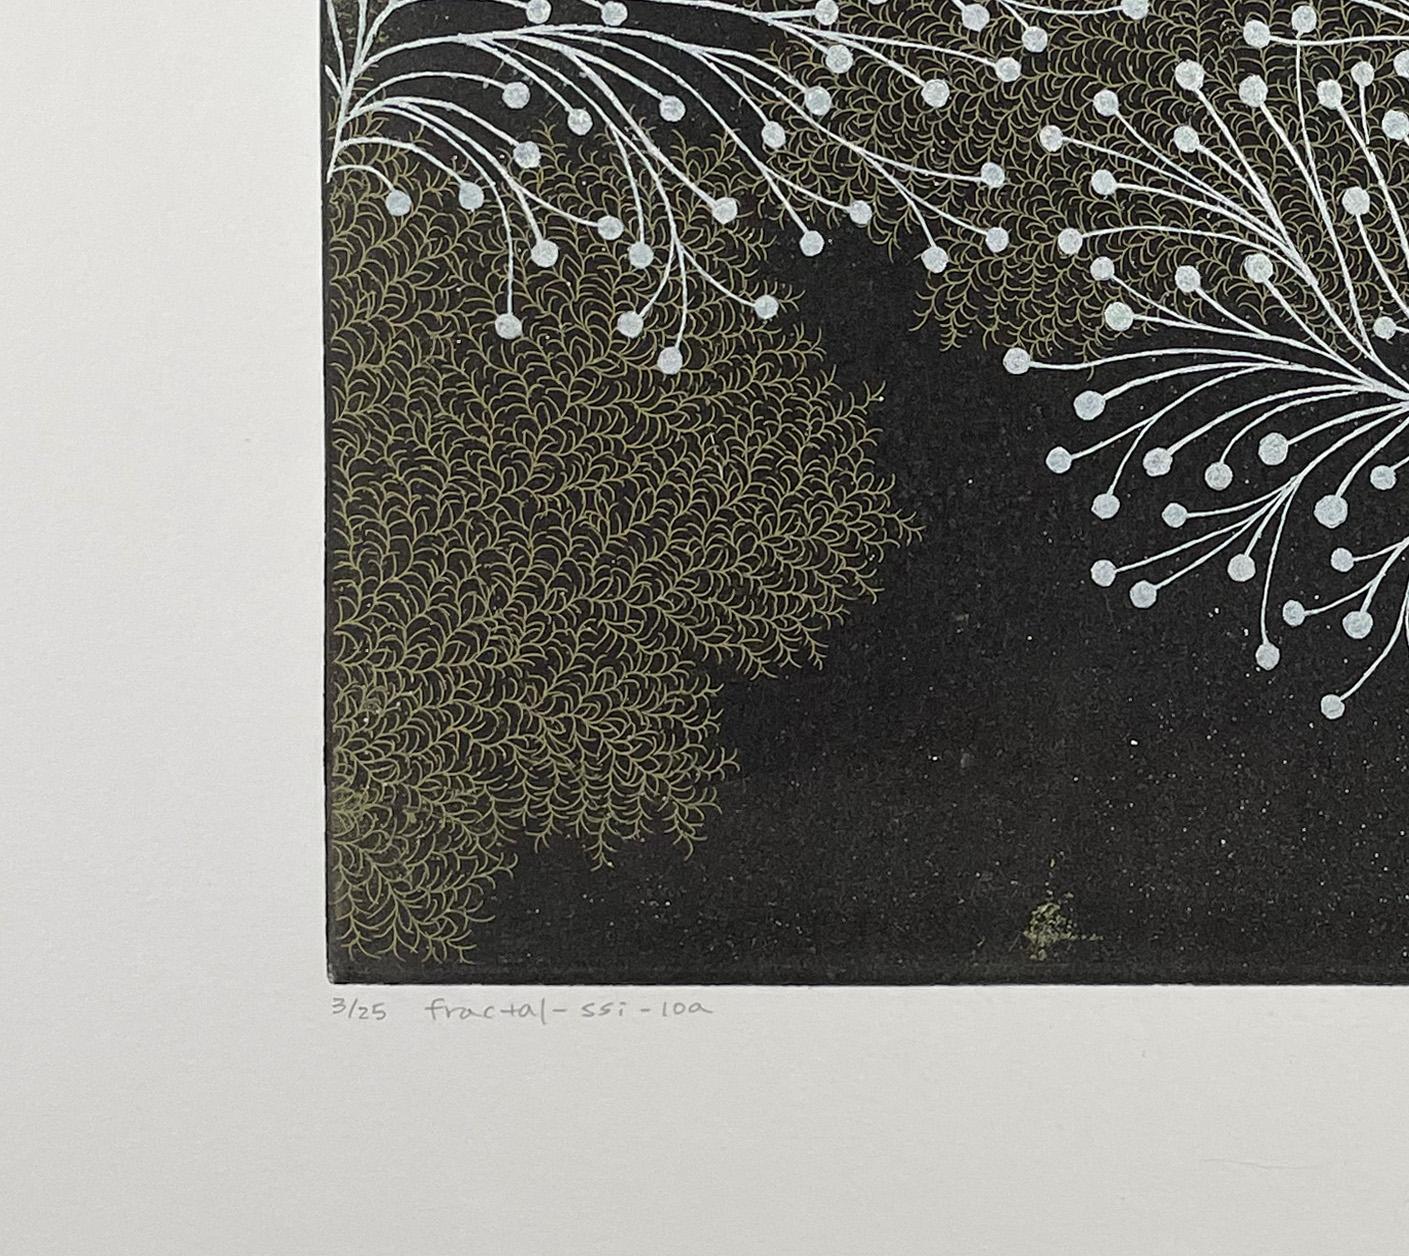 fractal-ssi-10a, by Seiko Tachibana For Sale 2